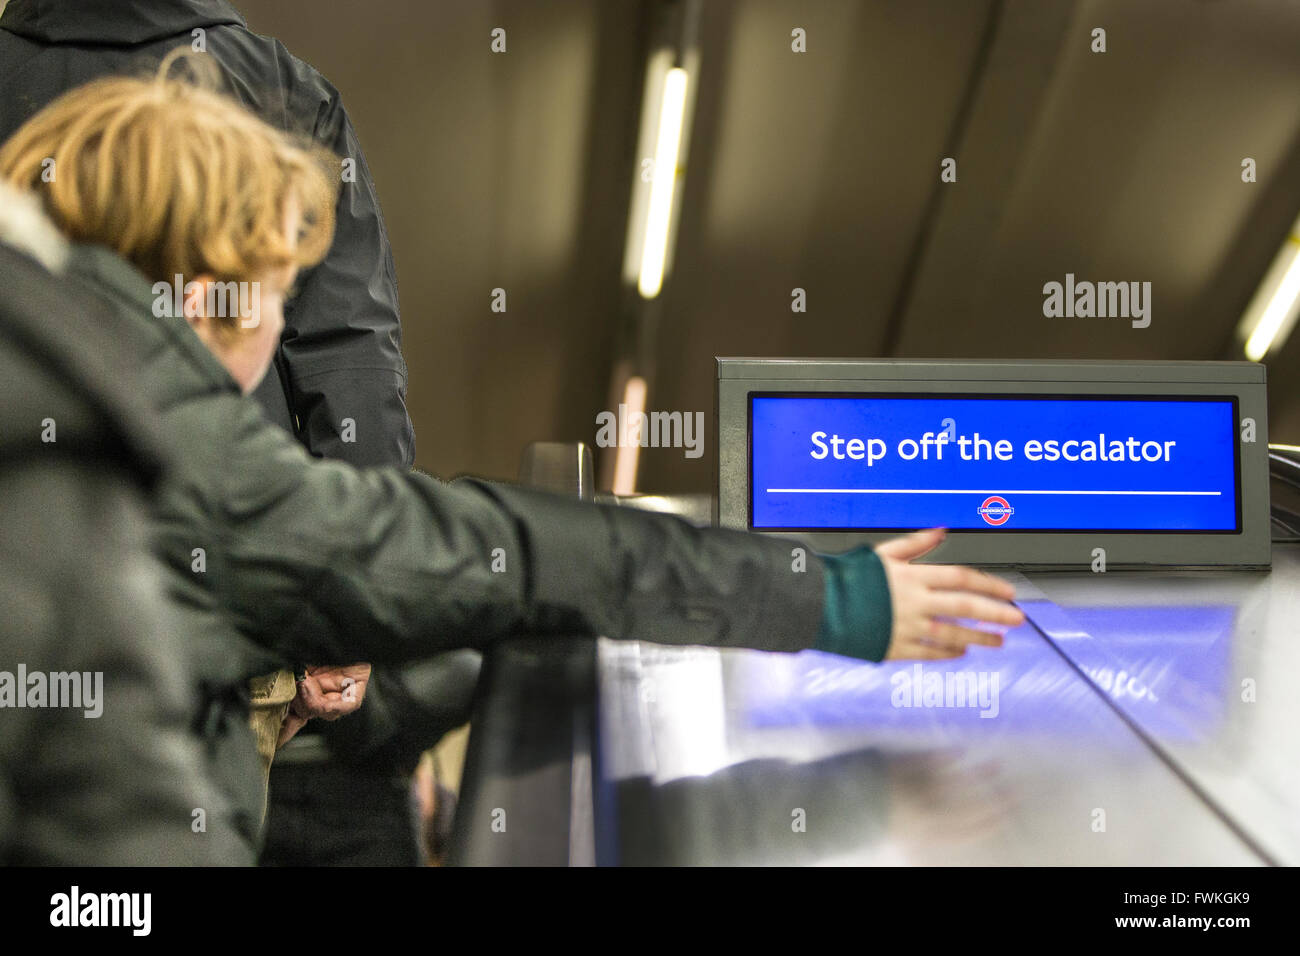 Young Boy on escalator - London Underground - Step off sign Stock Photo